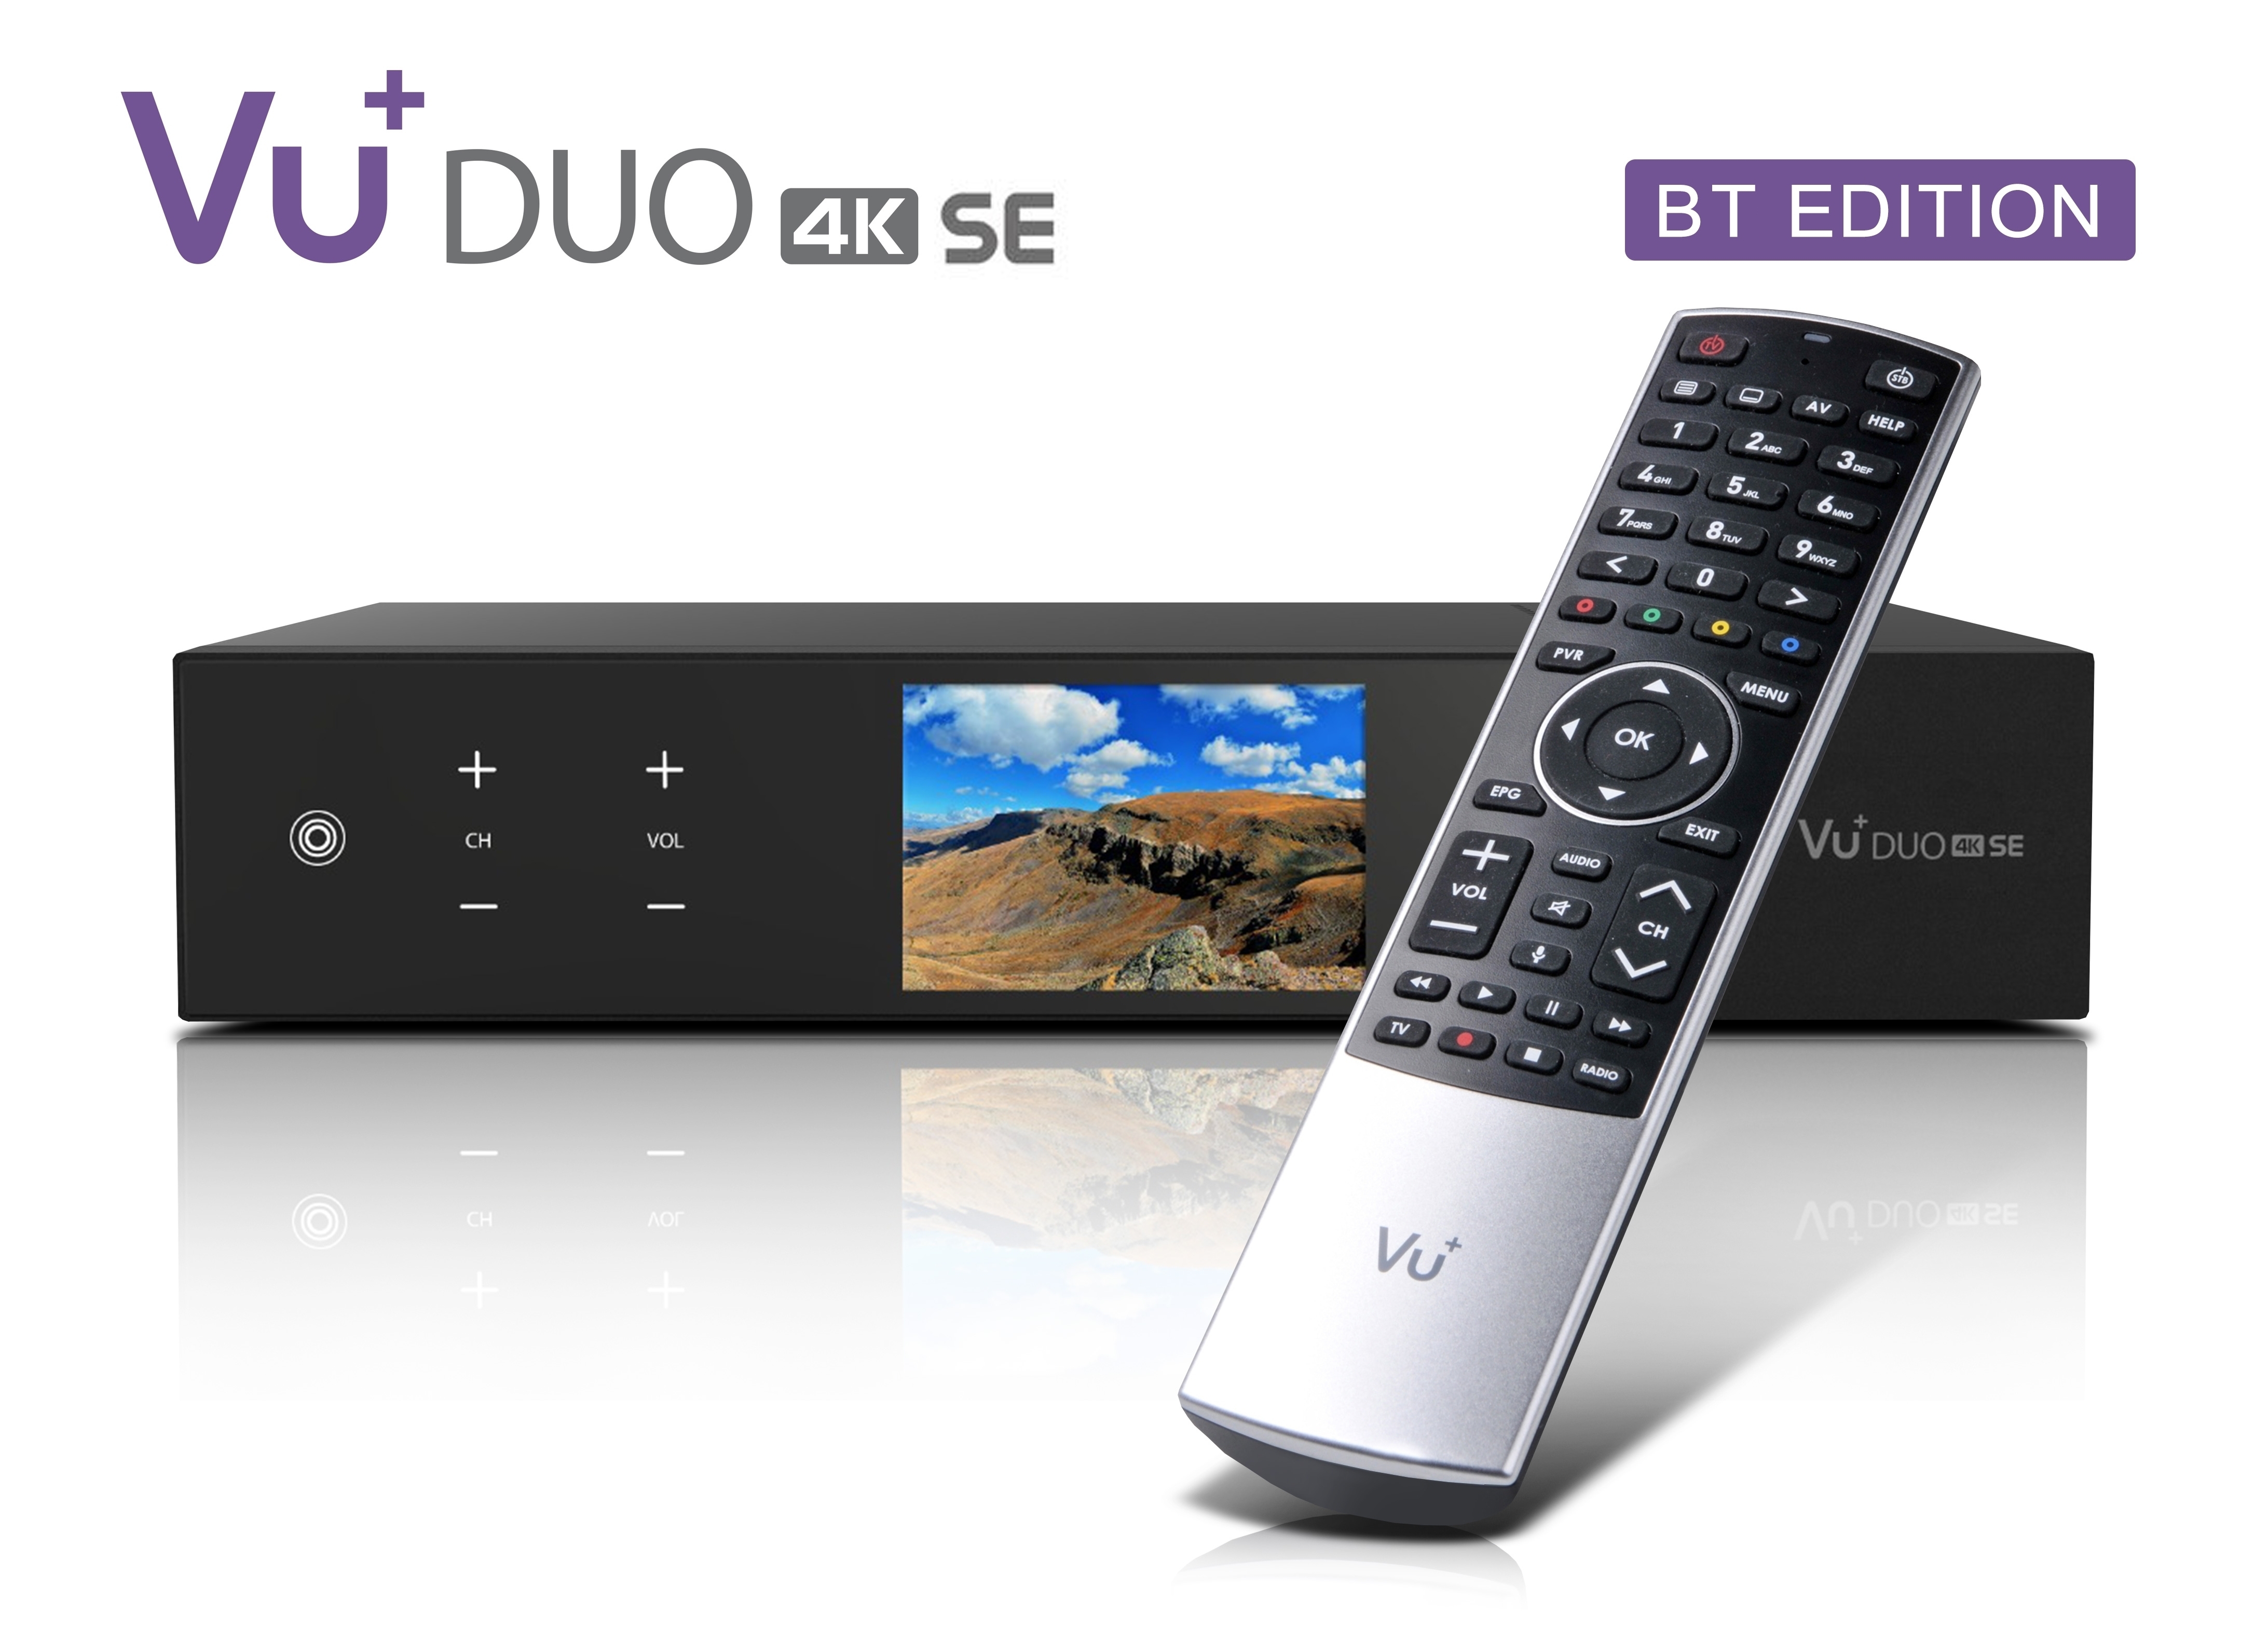 VU+ Duo 4K SE BT 1x DVB-S2X FBC Twin / 1x DVB-C FBC Tuner 2 TB HDD Linux Receiver UHD 2160p